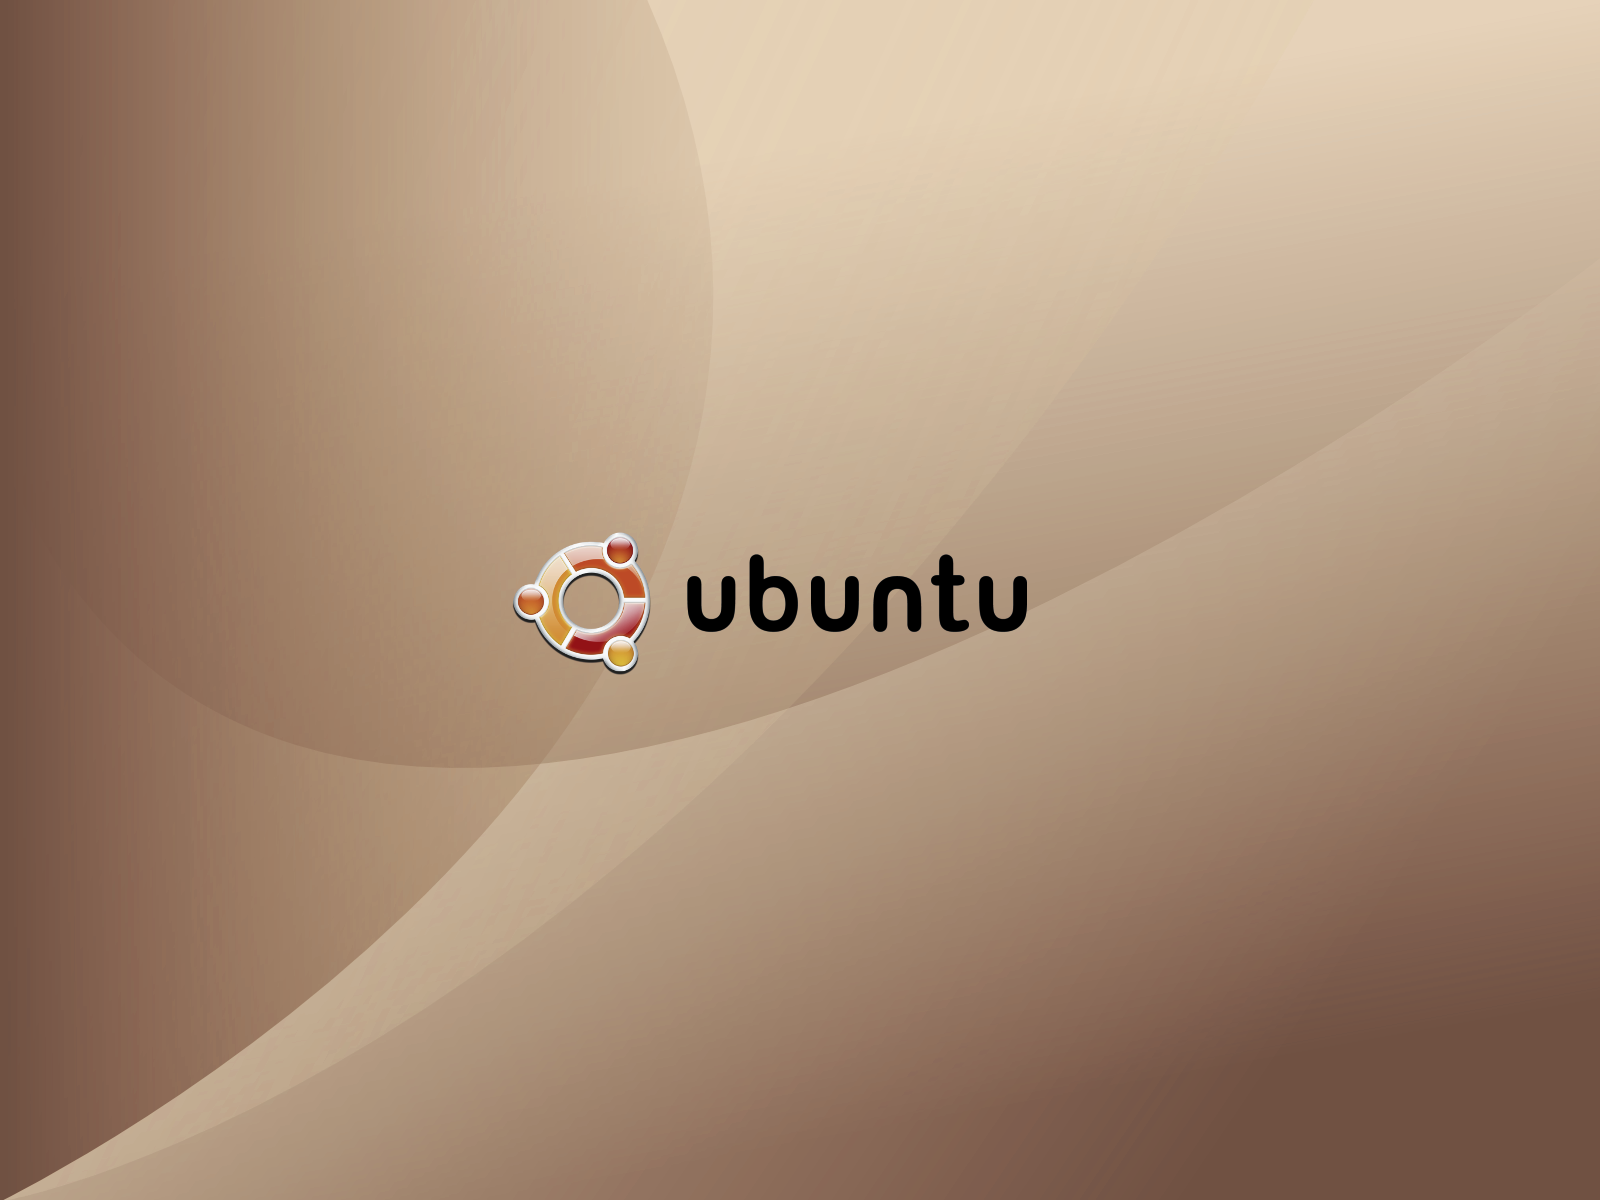 http://4.bp.blogspot.com/-QNghbQVeVSU/T_76swuSG9I/AAAAAAAAUNU/cskJAbu0FoA/s1600/Wallpaper_base_Ubuntu_modifica_by_iroquis.png